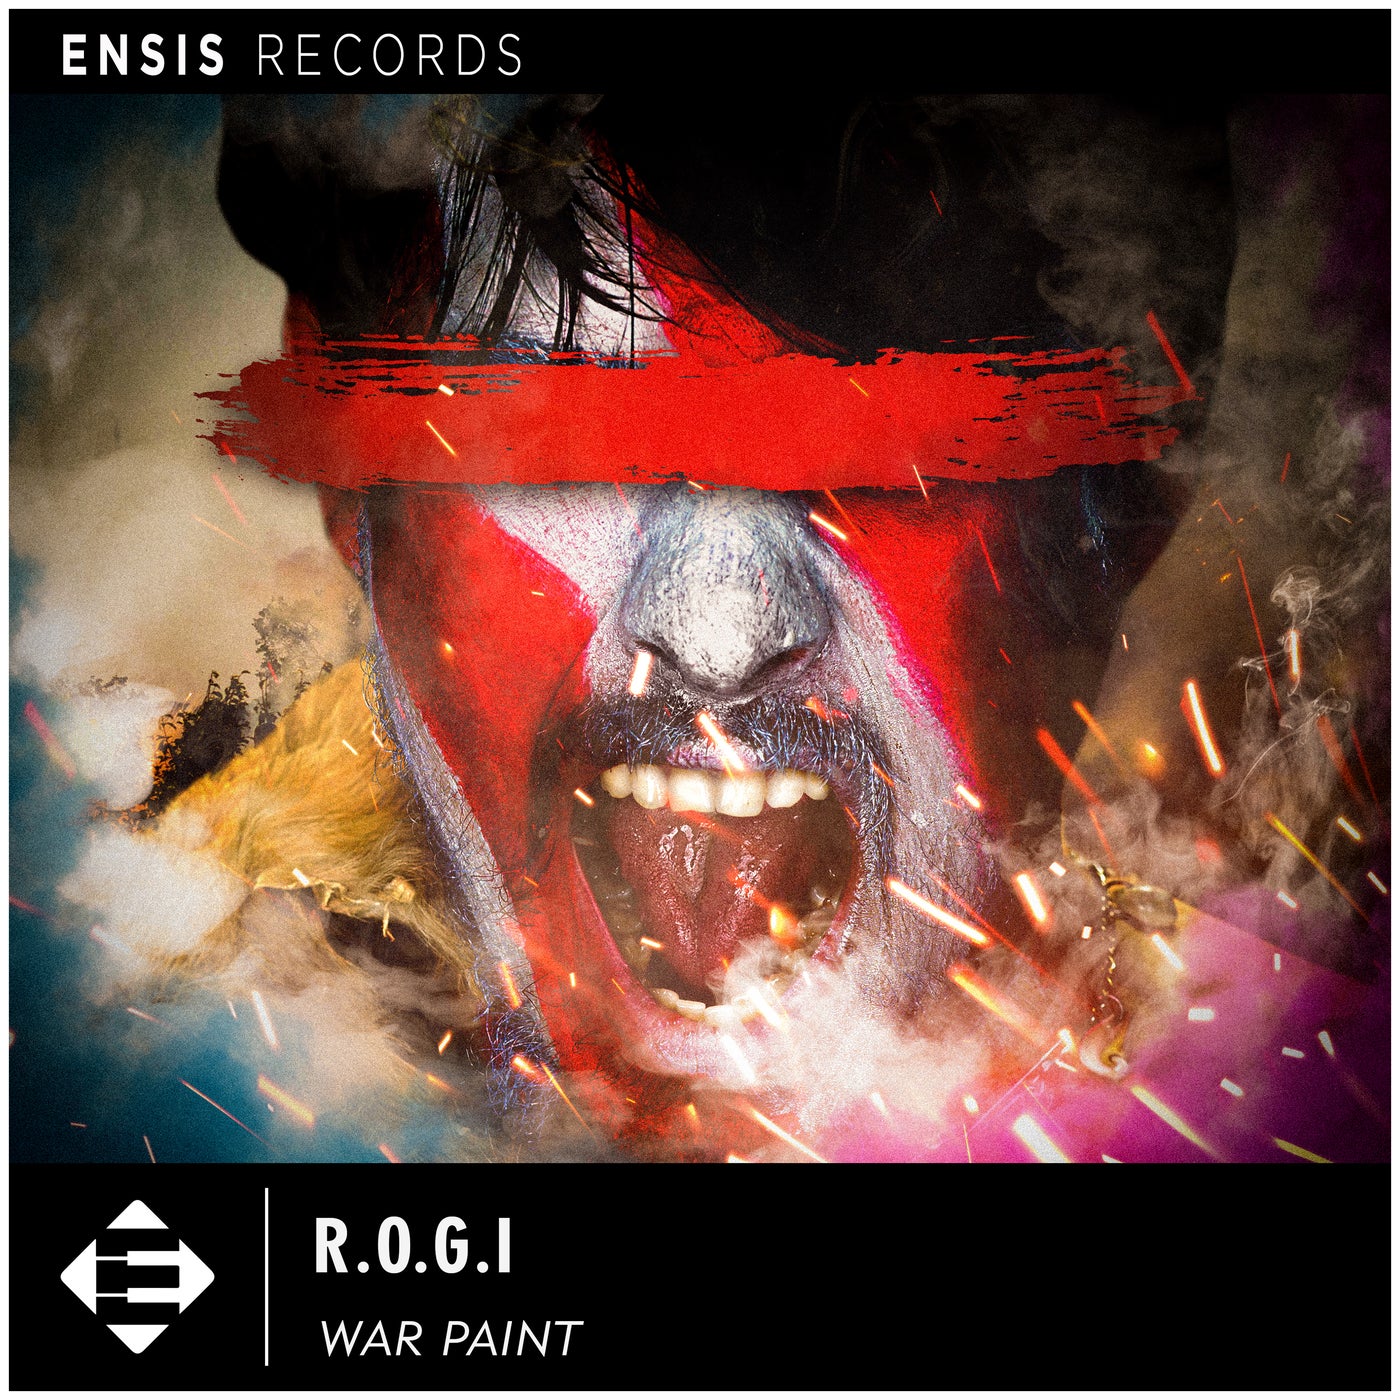 R.o.g.i music download - Beatport